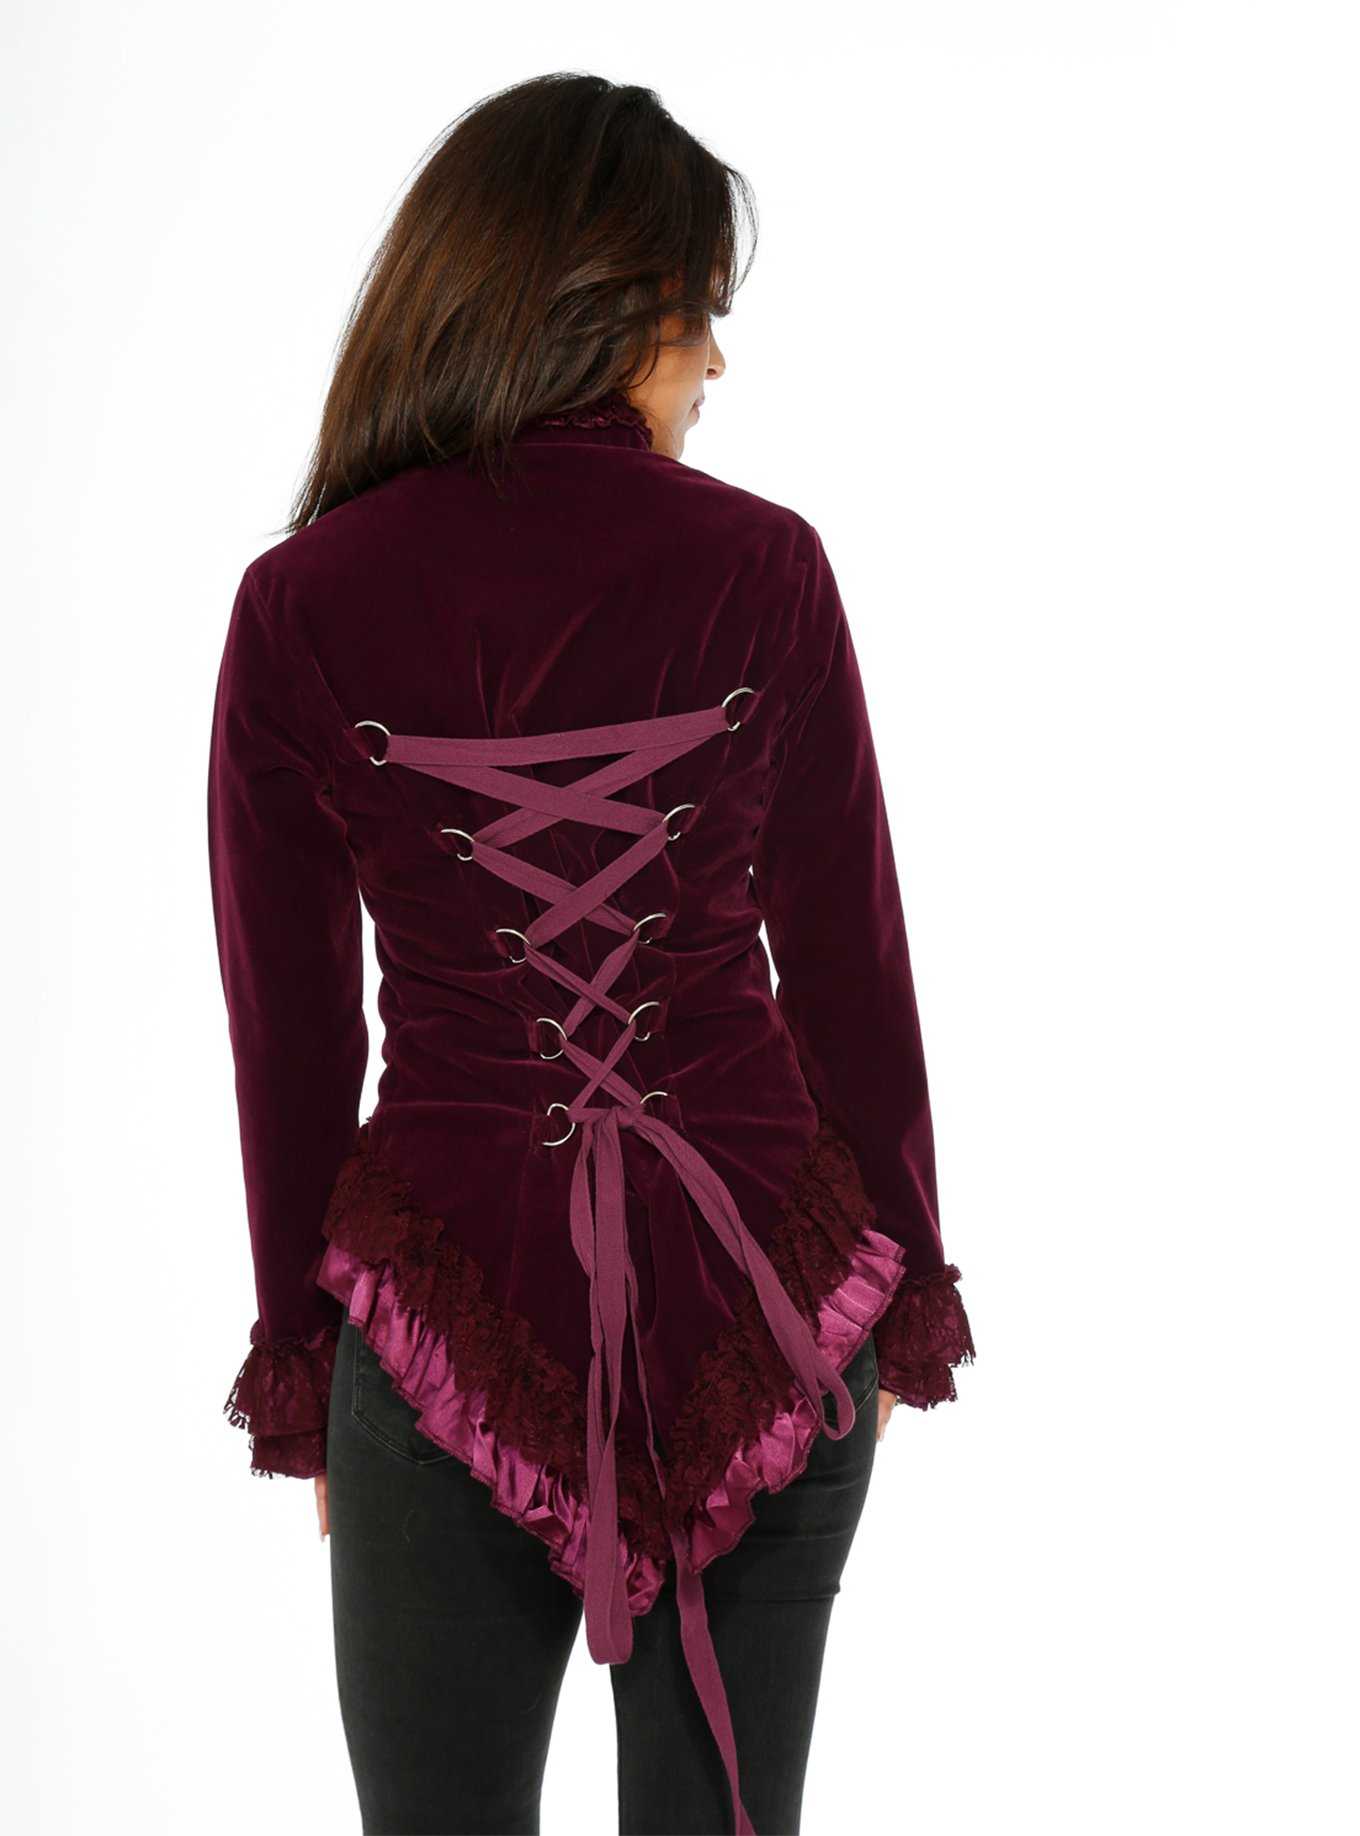 Purple Velvet Tailed Jacket, , hi-res